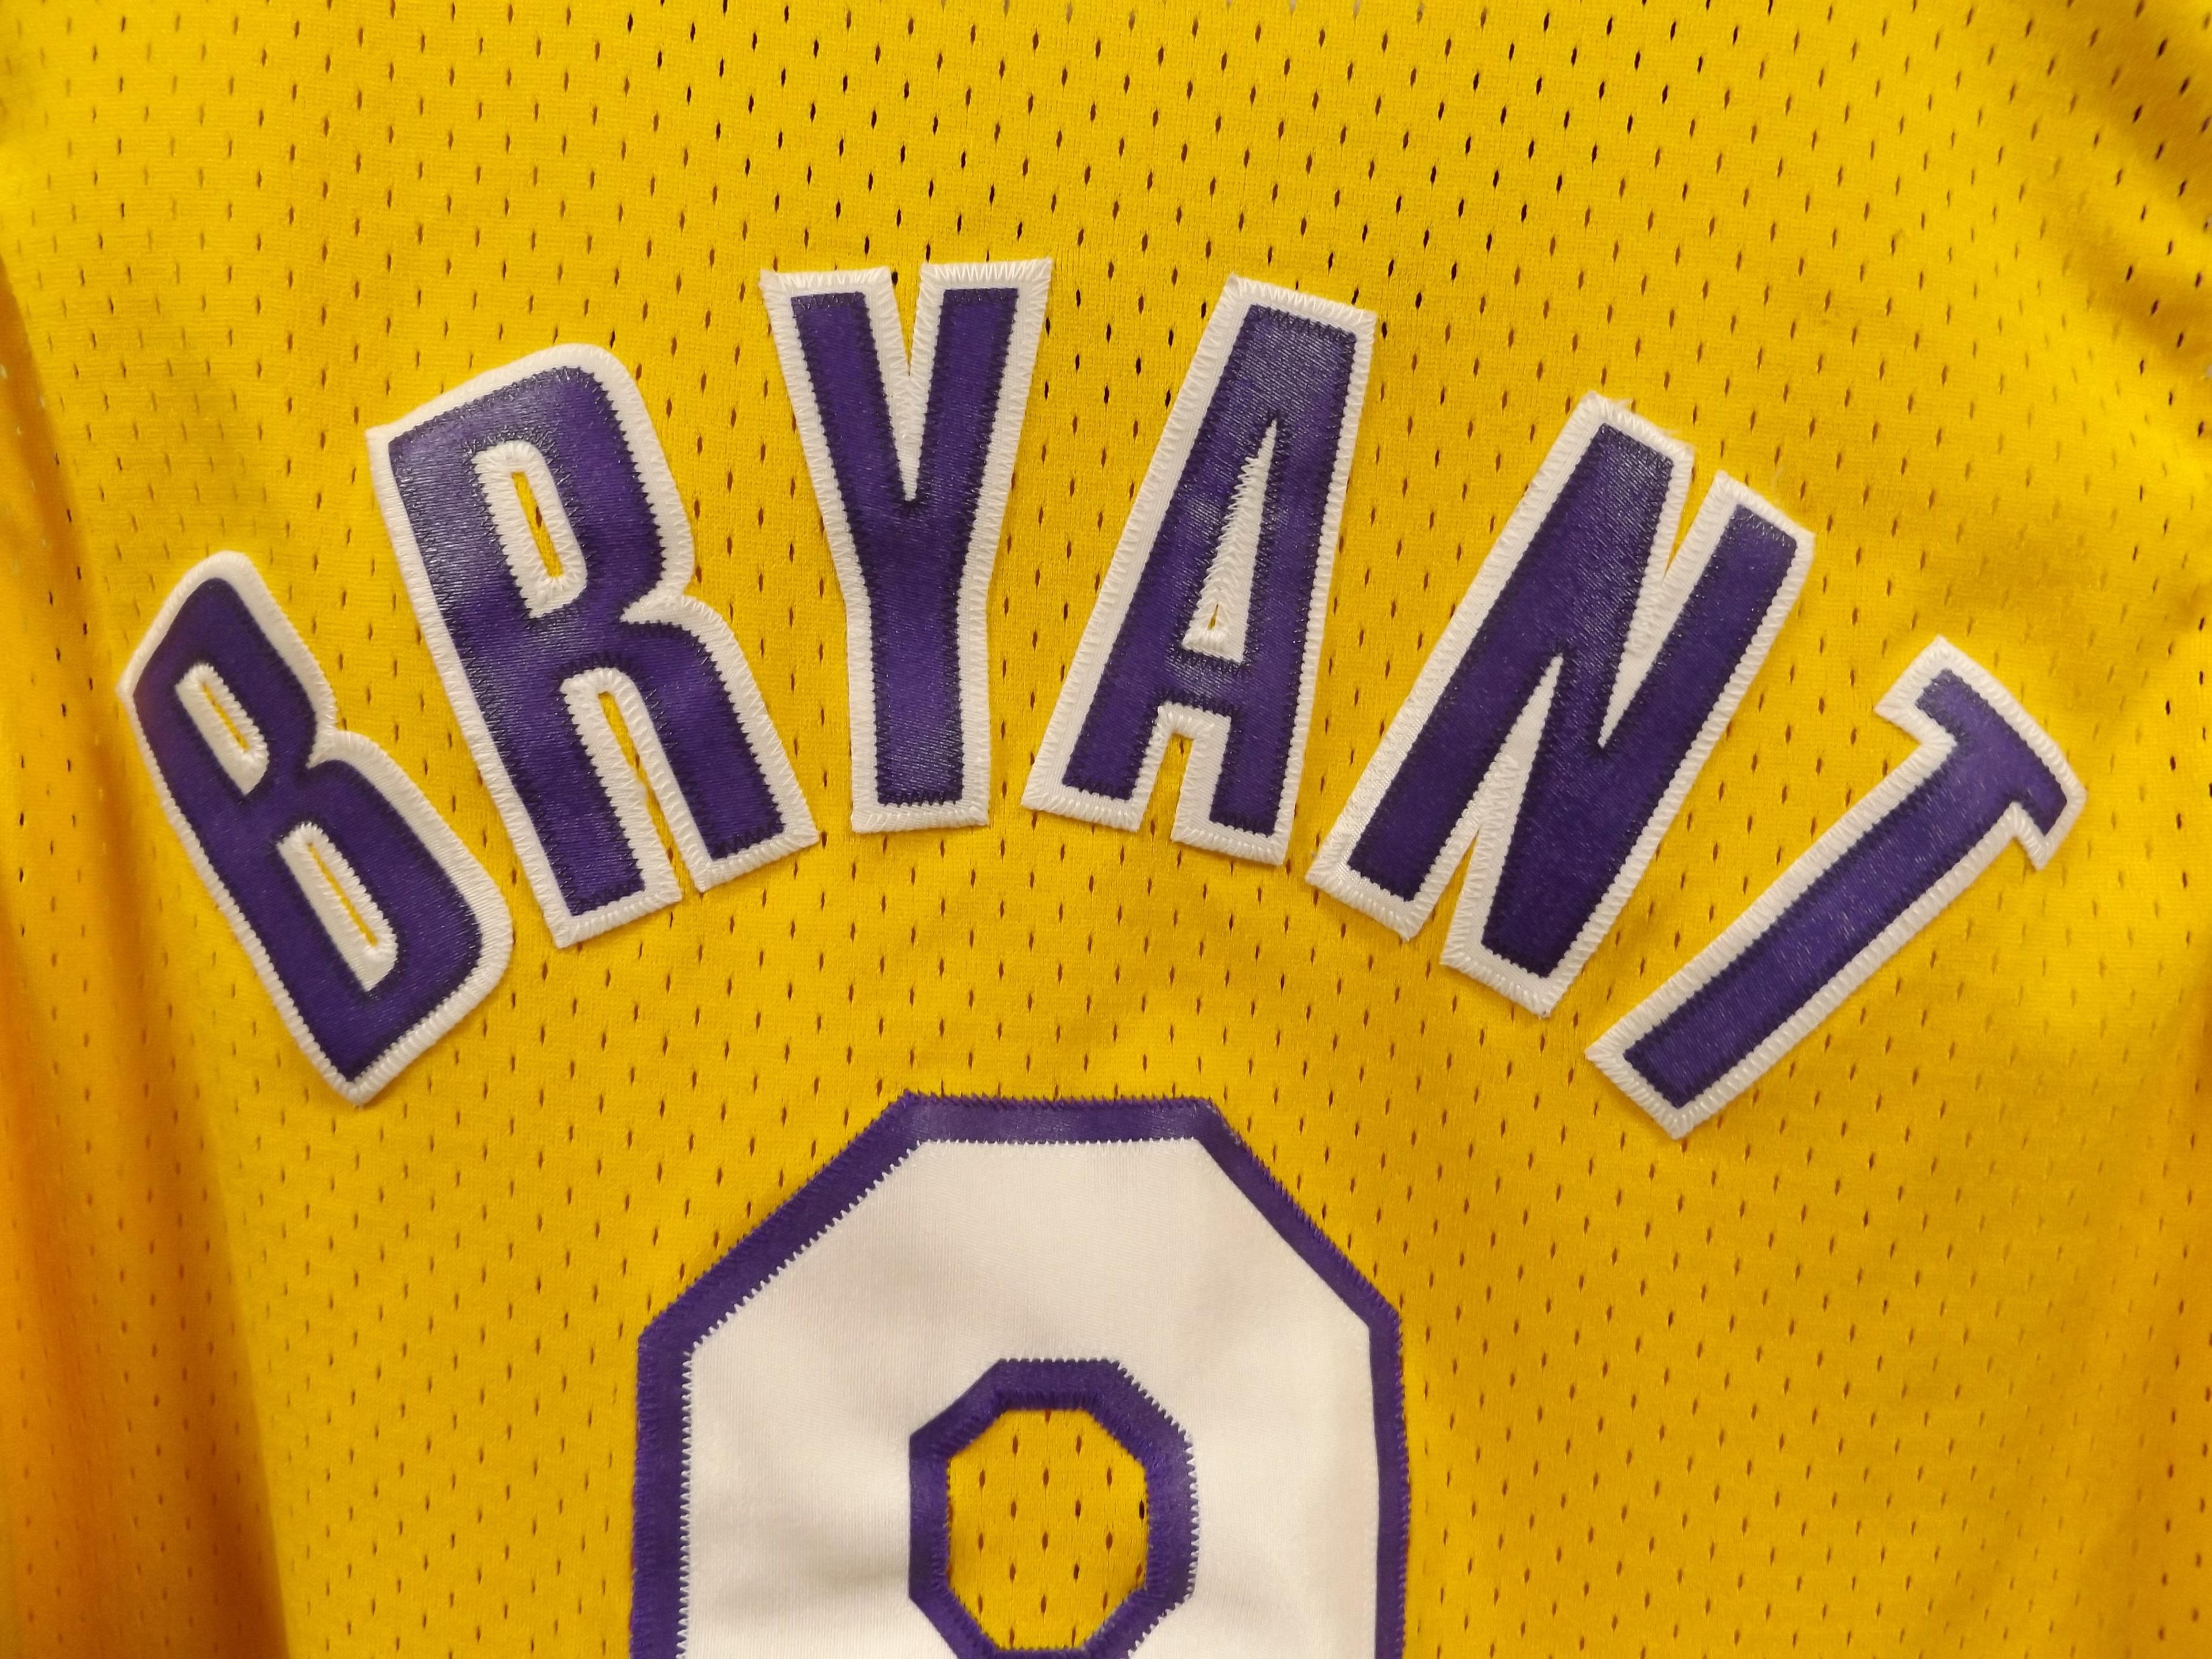 Lakers "Bryant 8" Jersey, size XXL